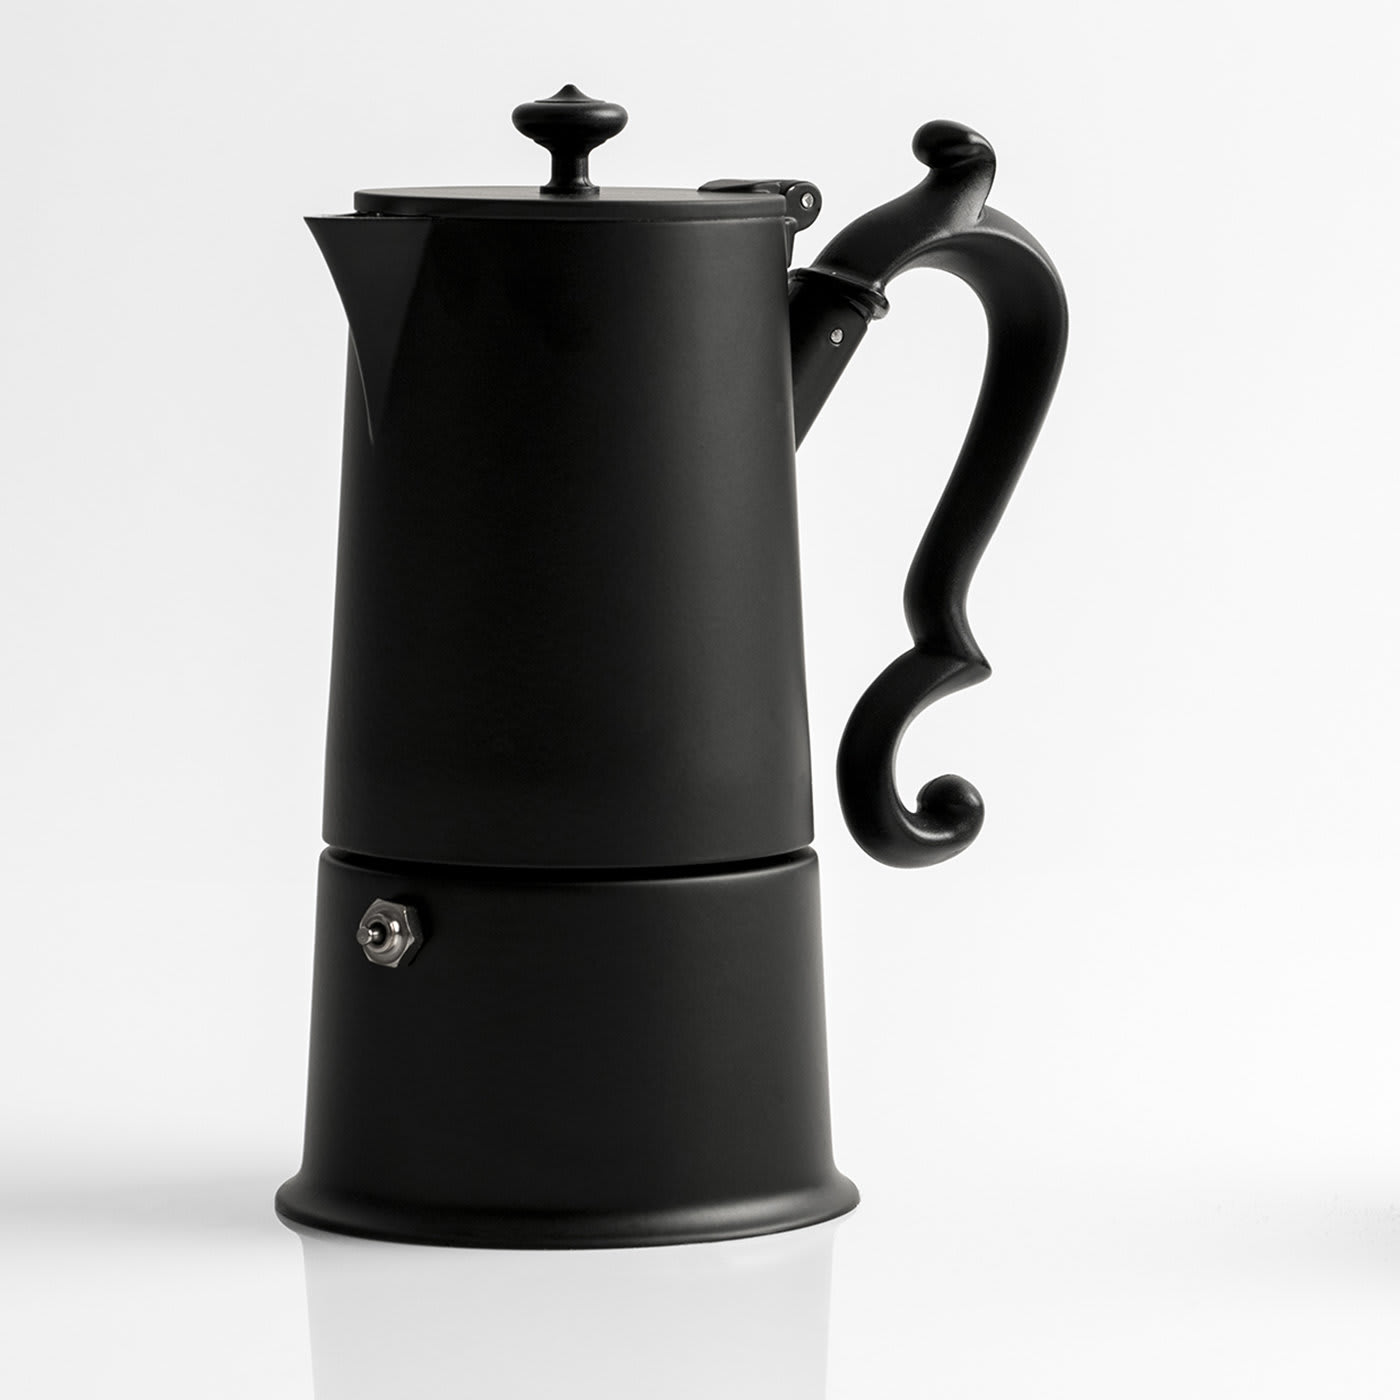 Lady Anne Coffee Maker by Lara Caffi - KnIndustrie